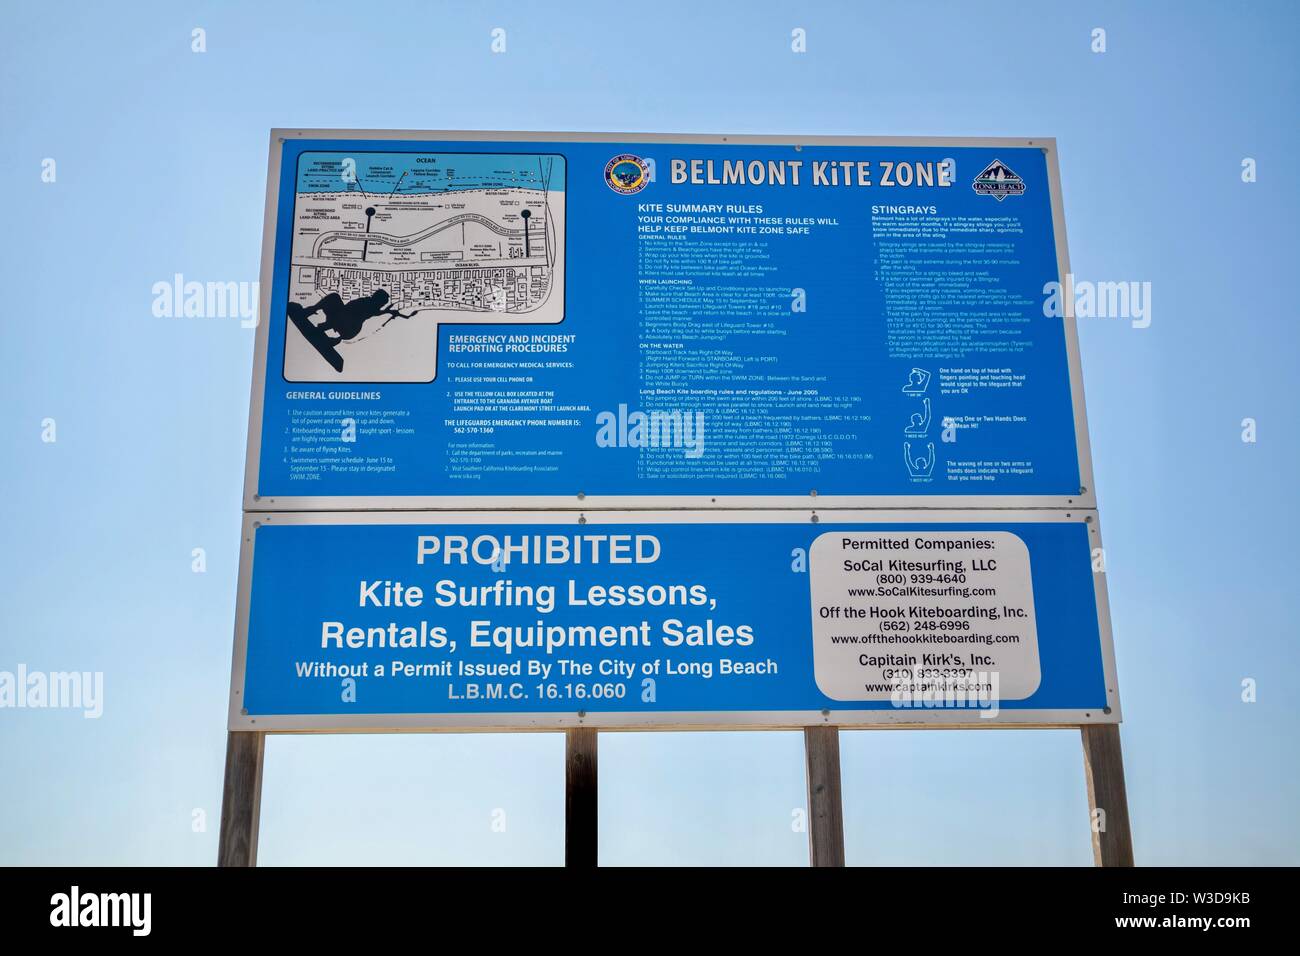 Belmont Kite Zone sign in Long Beach, Ca Stock Photo